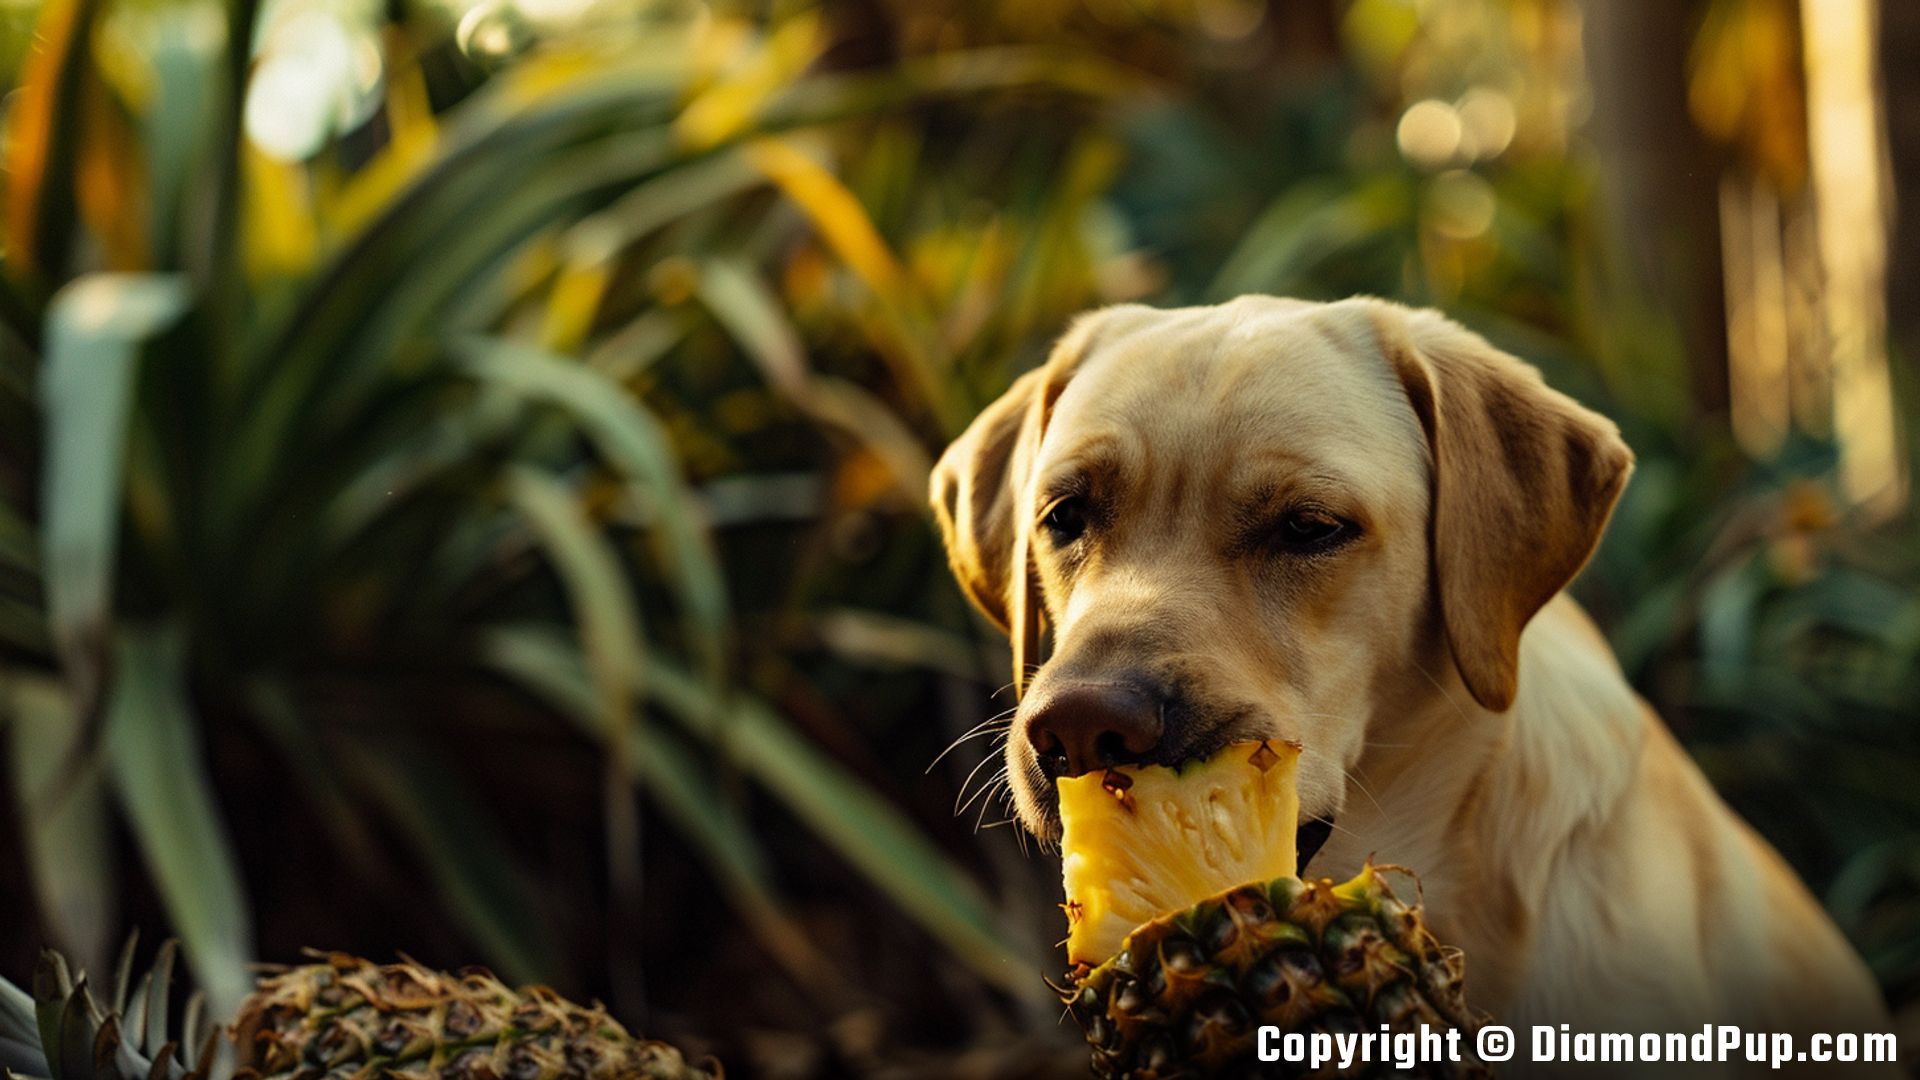 Photograph of an Adorable Labrador Snacking on Pineapple